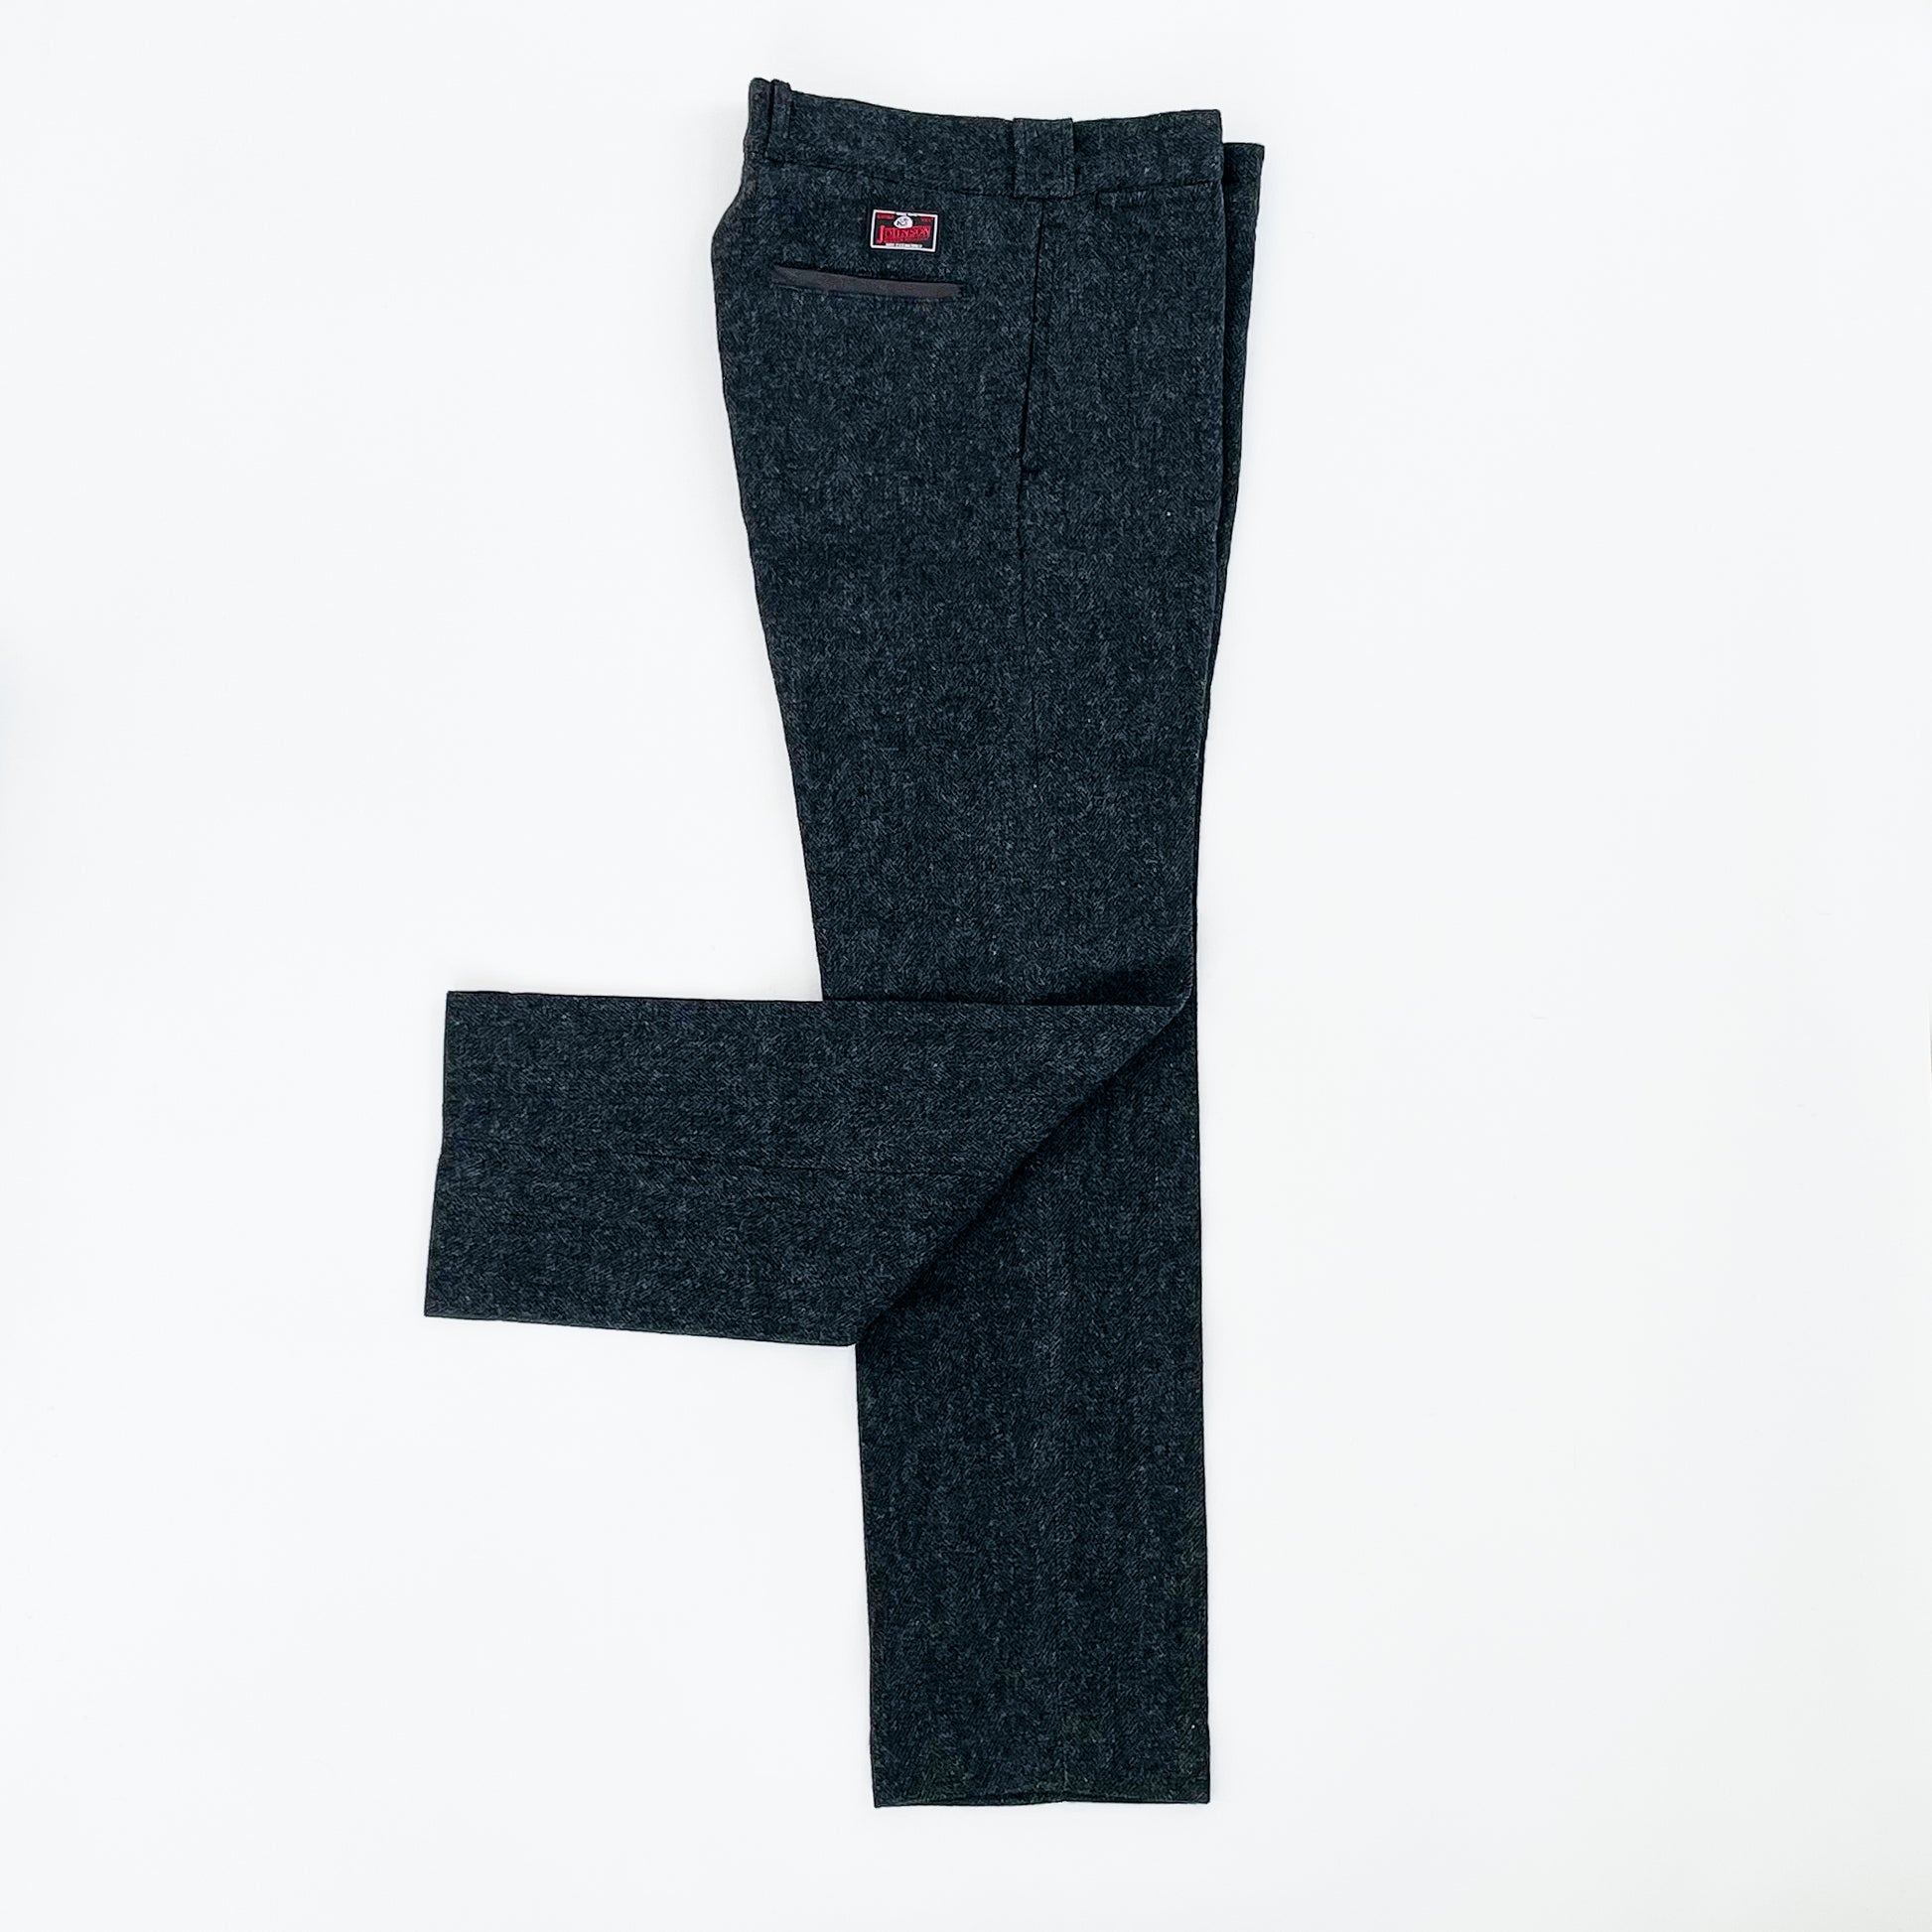 Traditional Wool Pants - Gray Herringbone – Johnson Woolen Mills